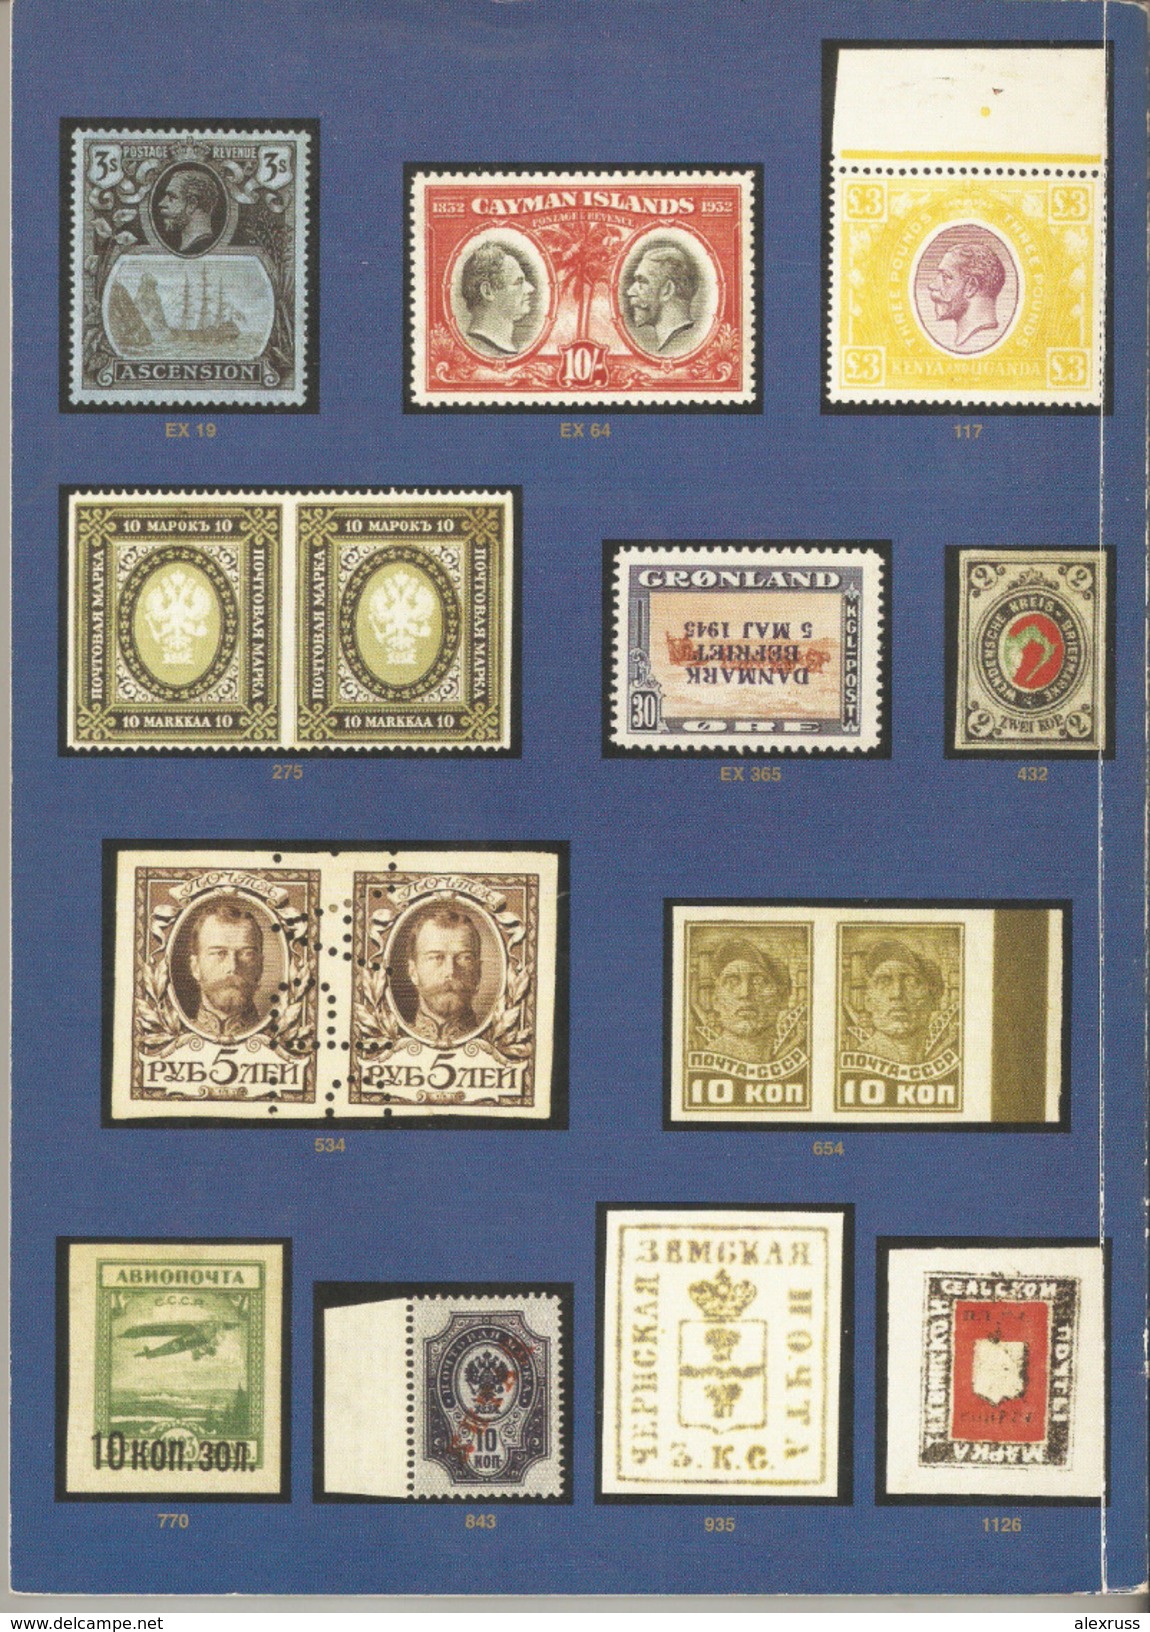 Raritan Stamps Auction 36,Sep 2008 Catalog Of Rare Russia Stamps,Errors & Worldwide Rarities - Catalogi Van Veilinghuizen